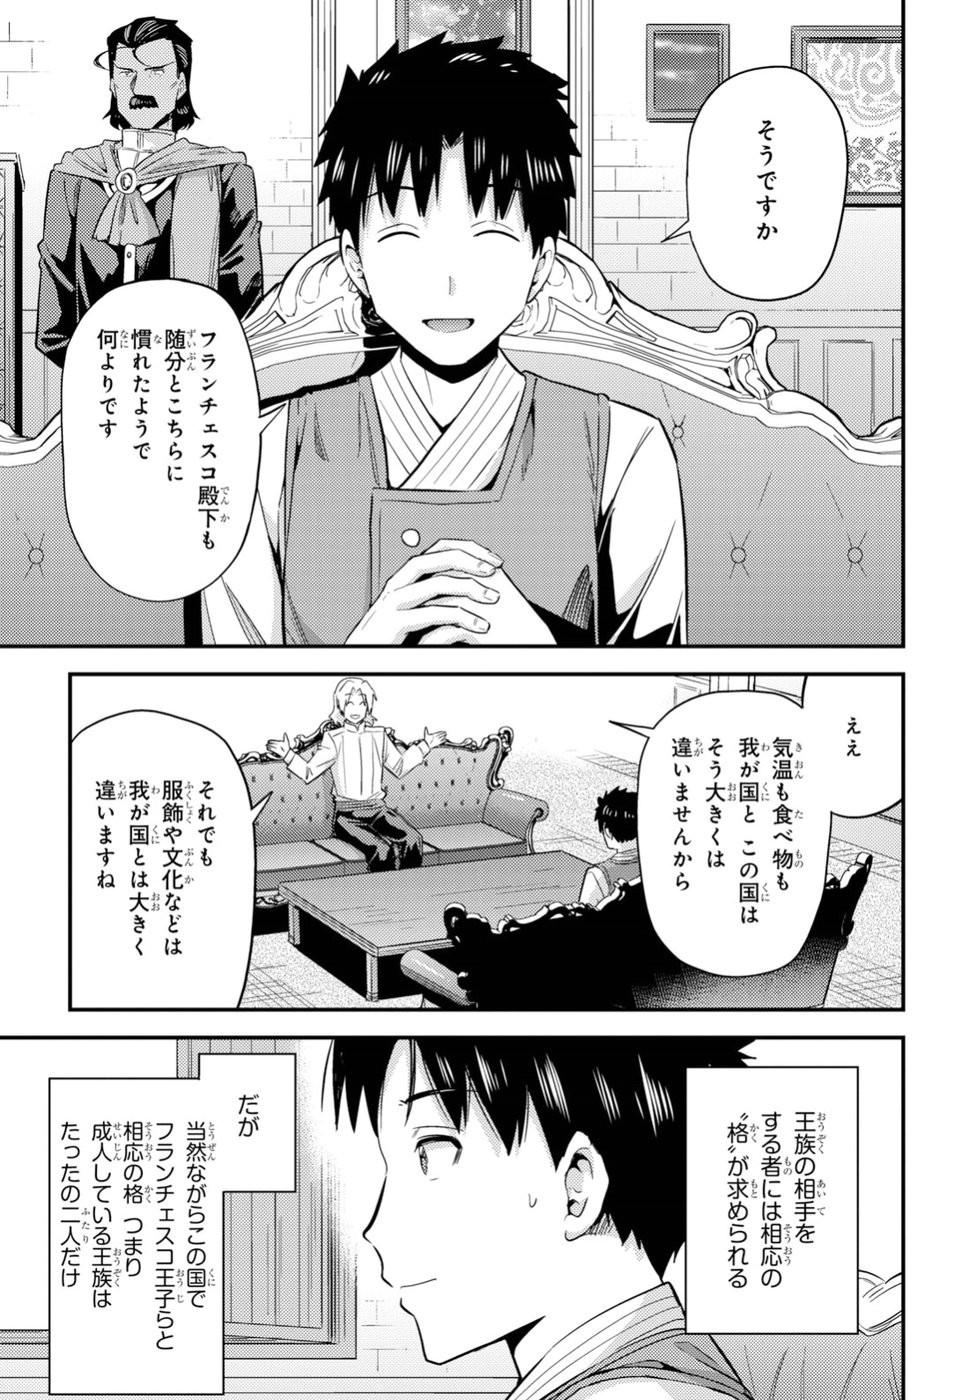 Risou no Himo Seikatsu - Chapter 021 - Page 3